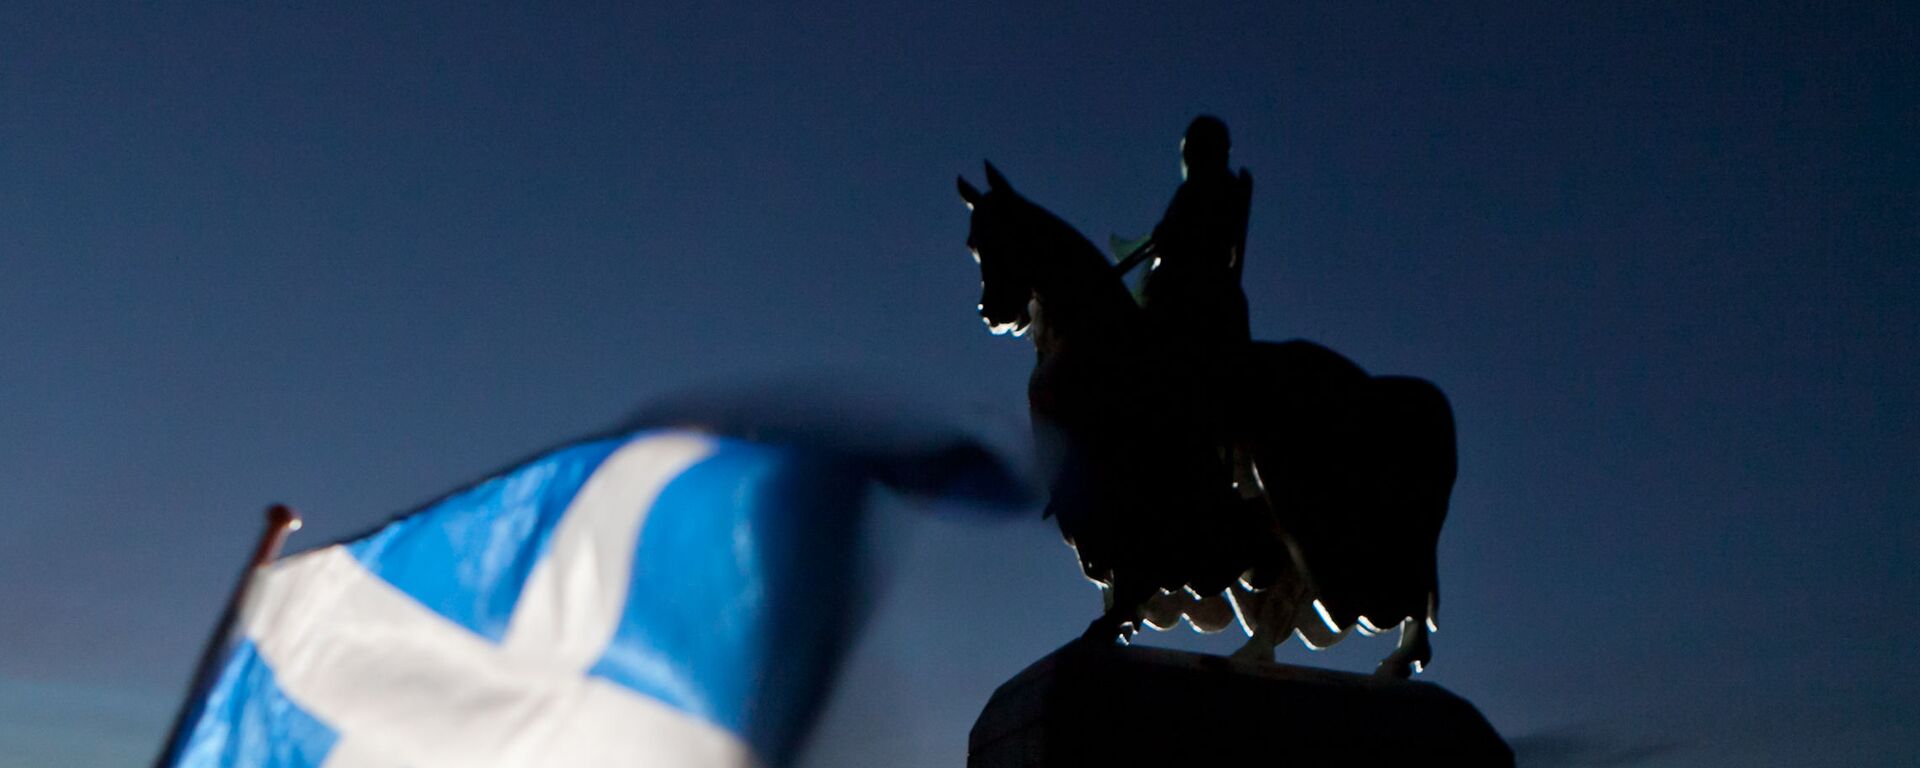 A Scottish Saltire flag blows in the wind near the statue of Scottish King Robert the Bruce, at Bannockburn, Scotland, Thursday, Jan. 12, 2012 - Sputnik International, 1920, 28.01.2021